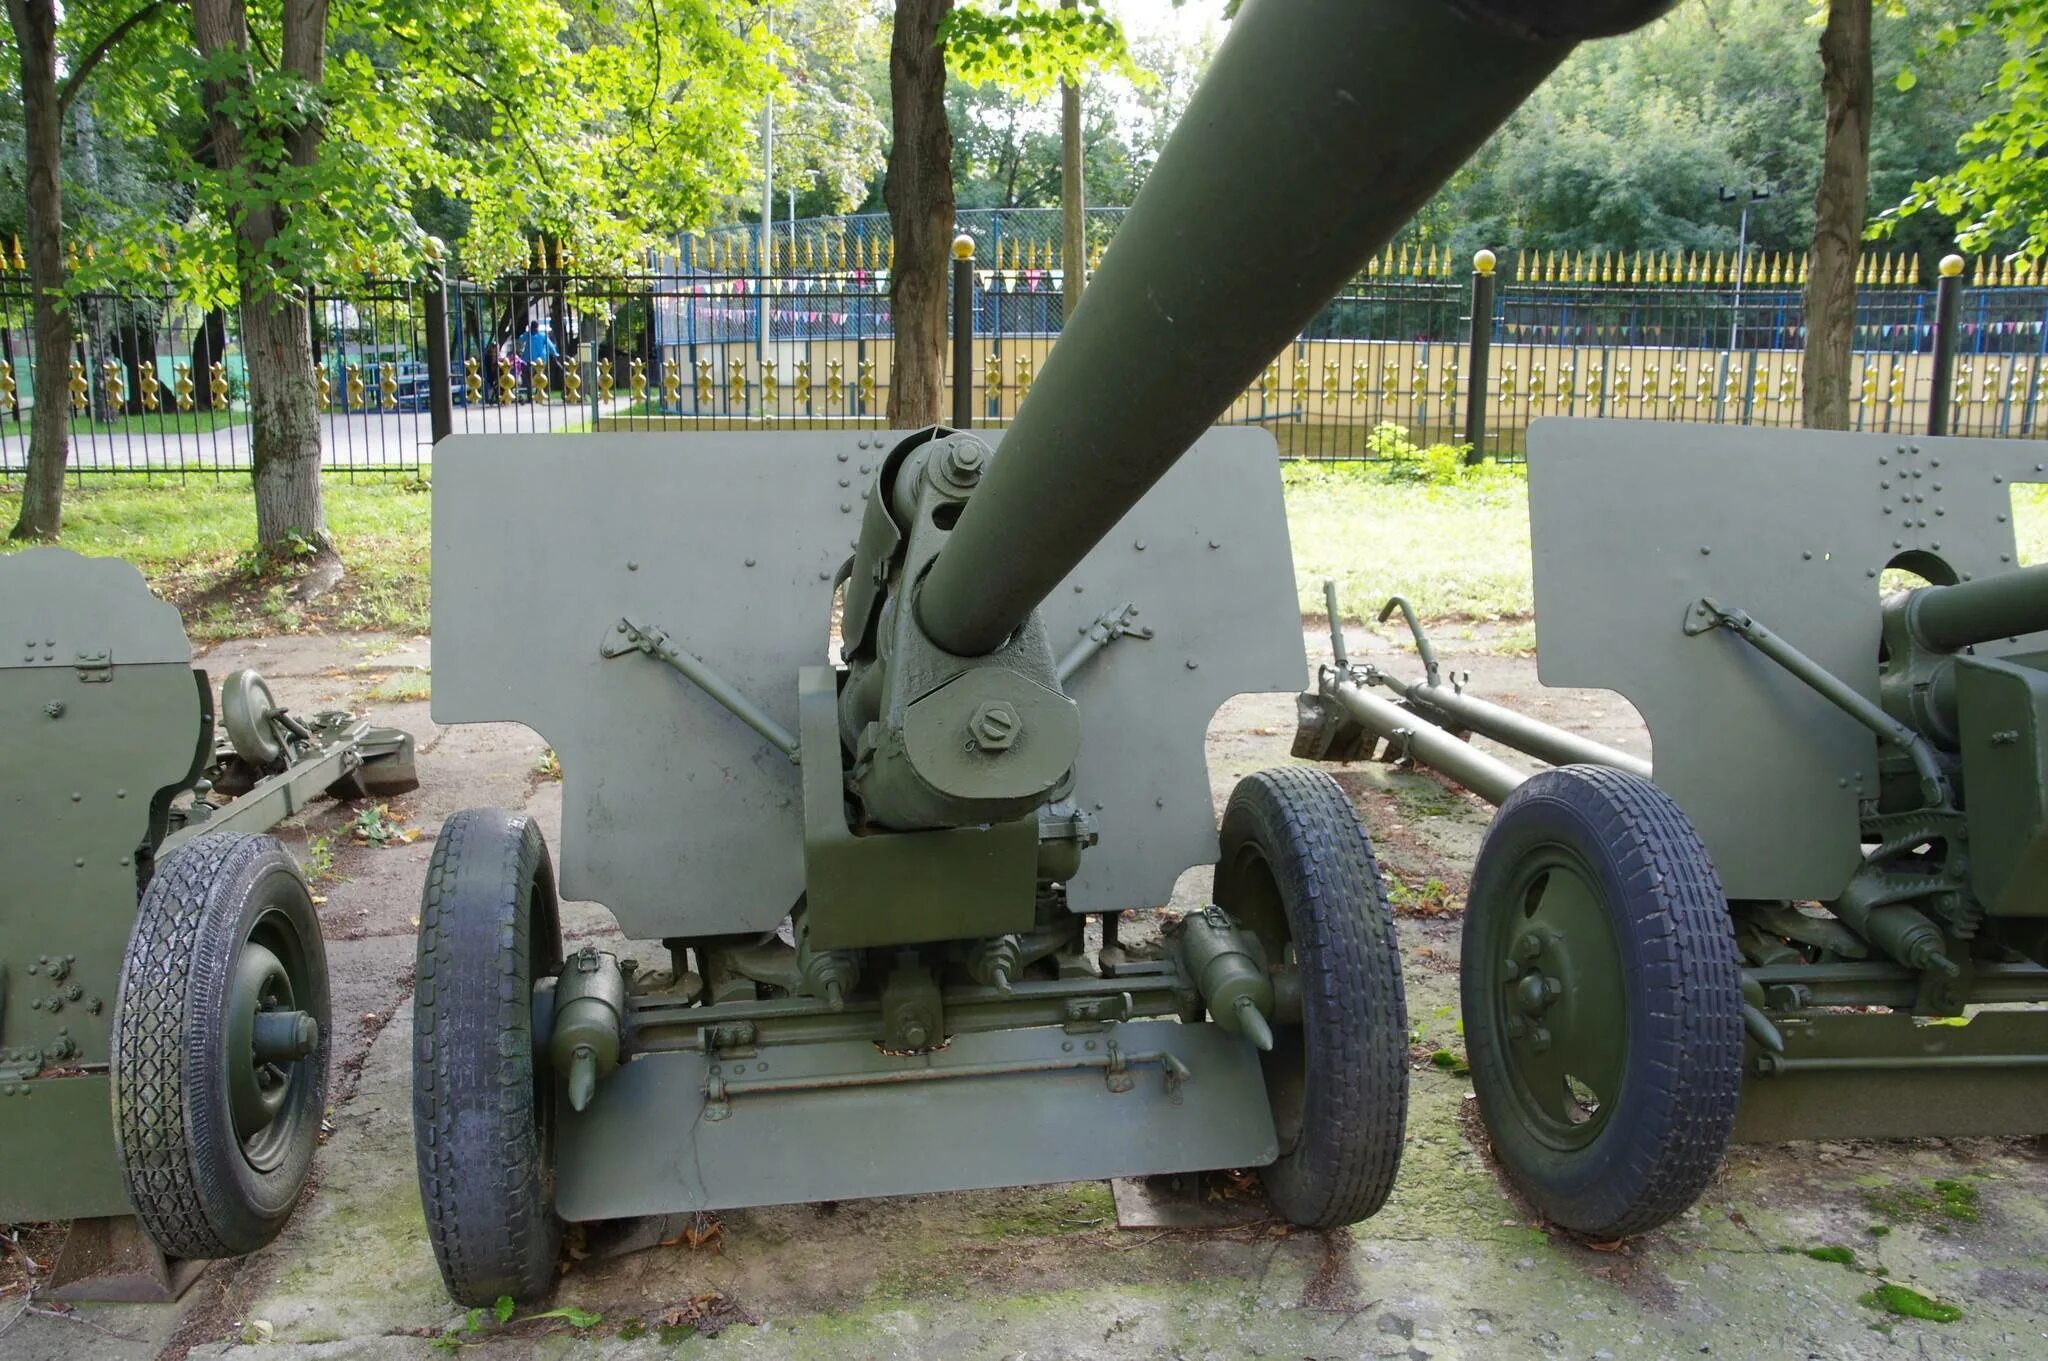 76 мм дивизионная пушка образца